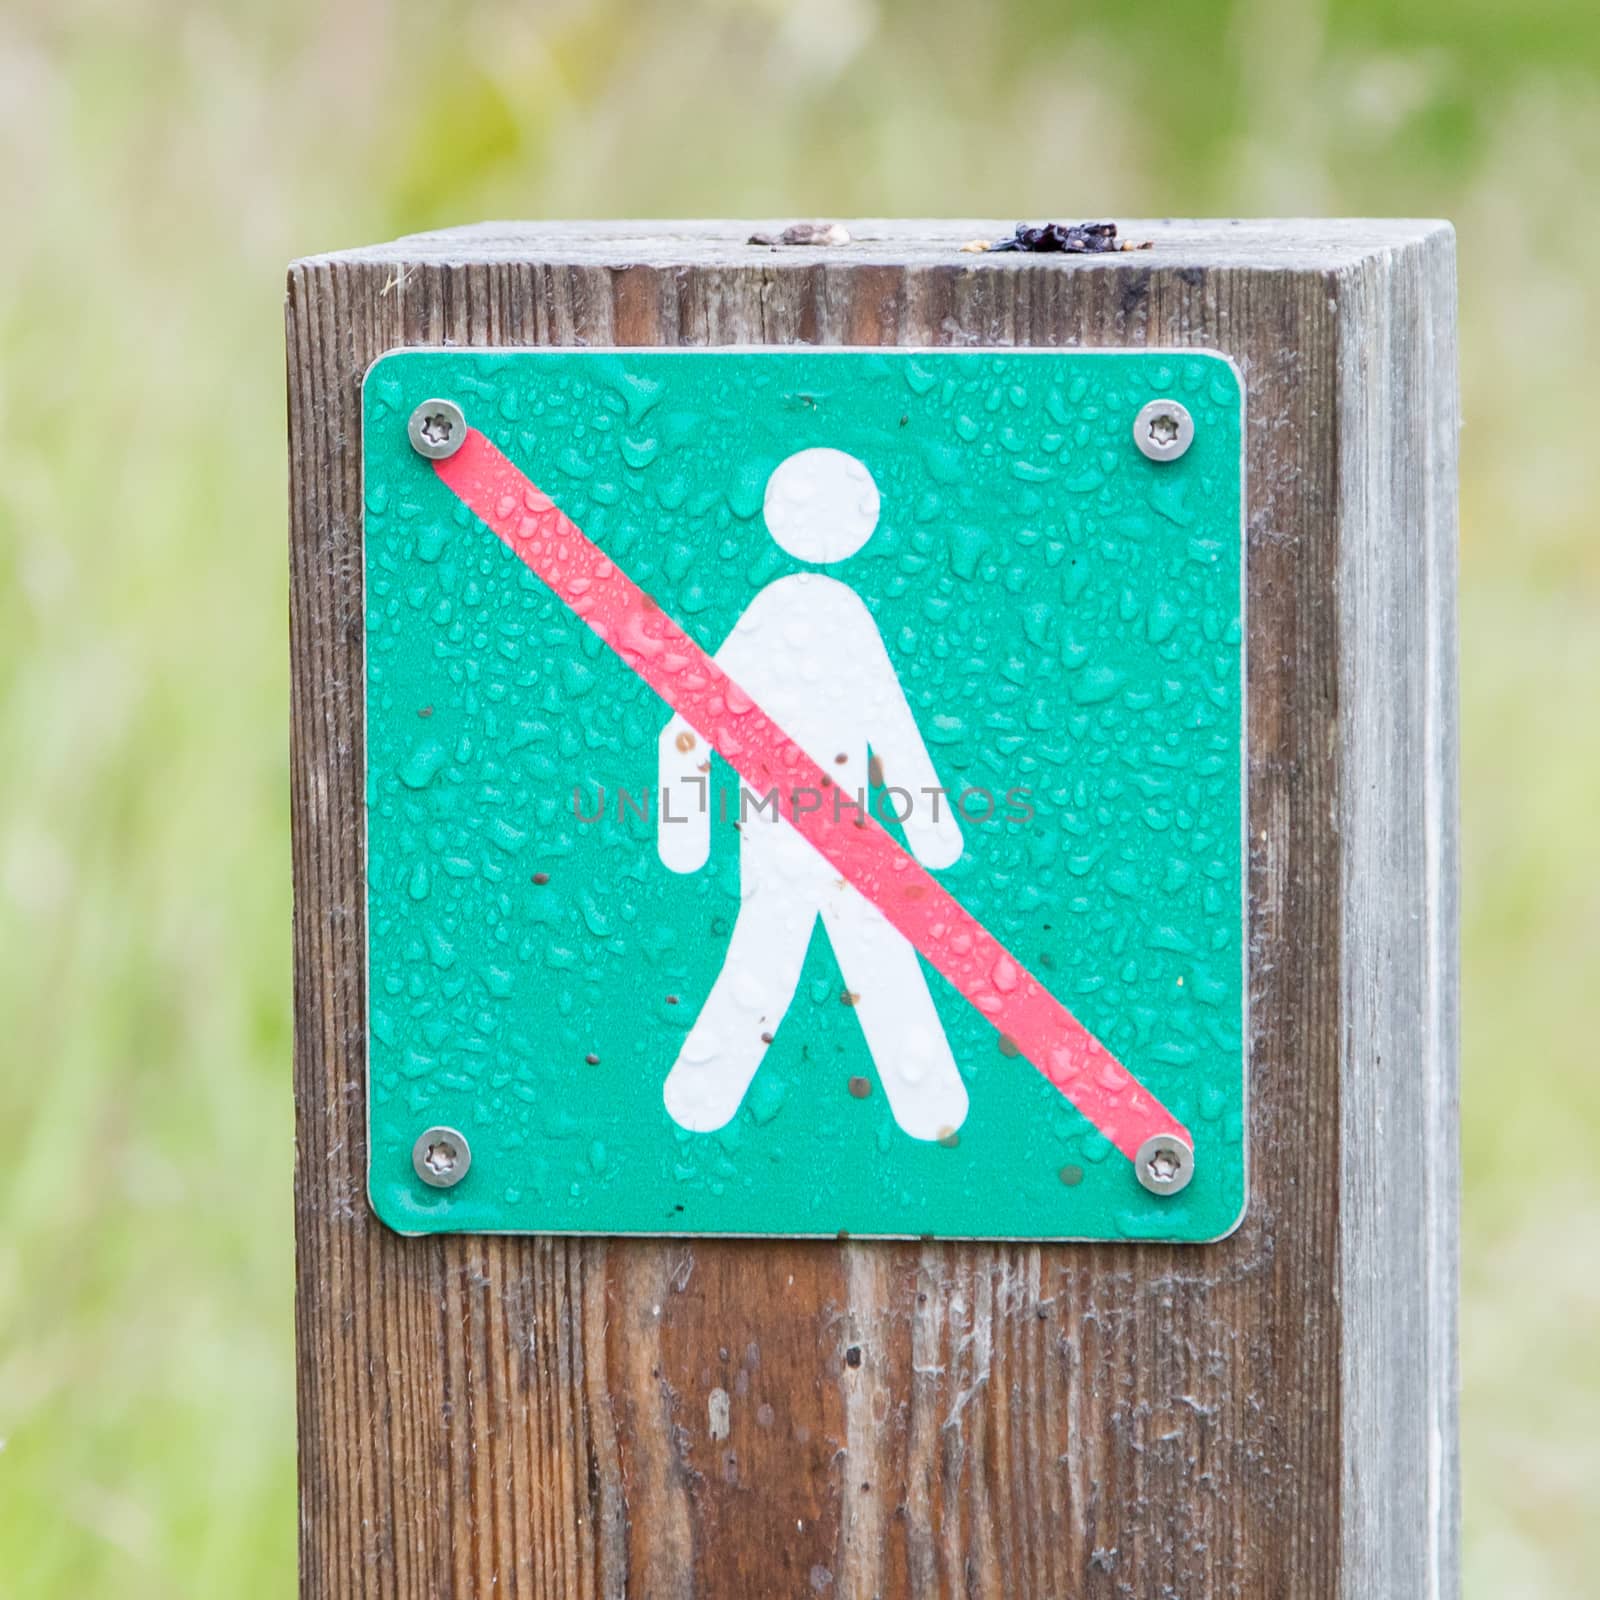 Forbidden to walk over here - Iceland by michaklootwijk